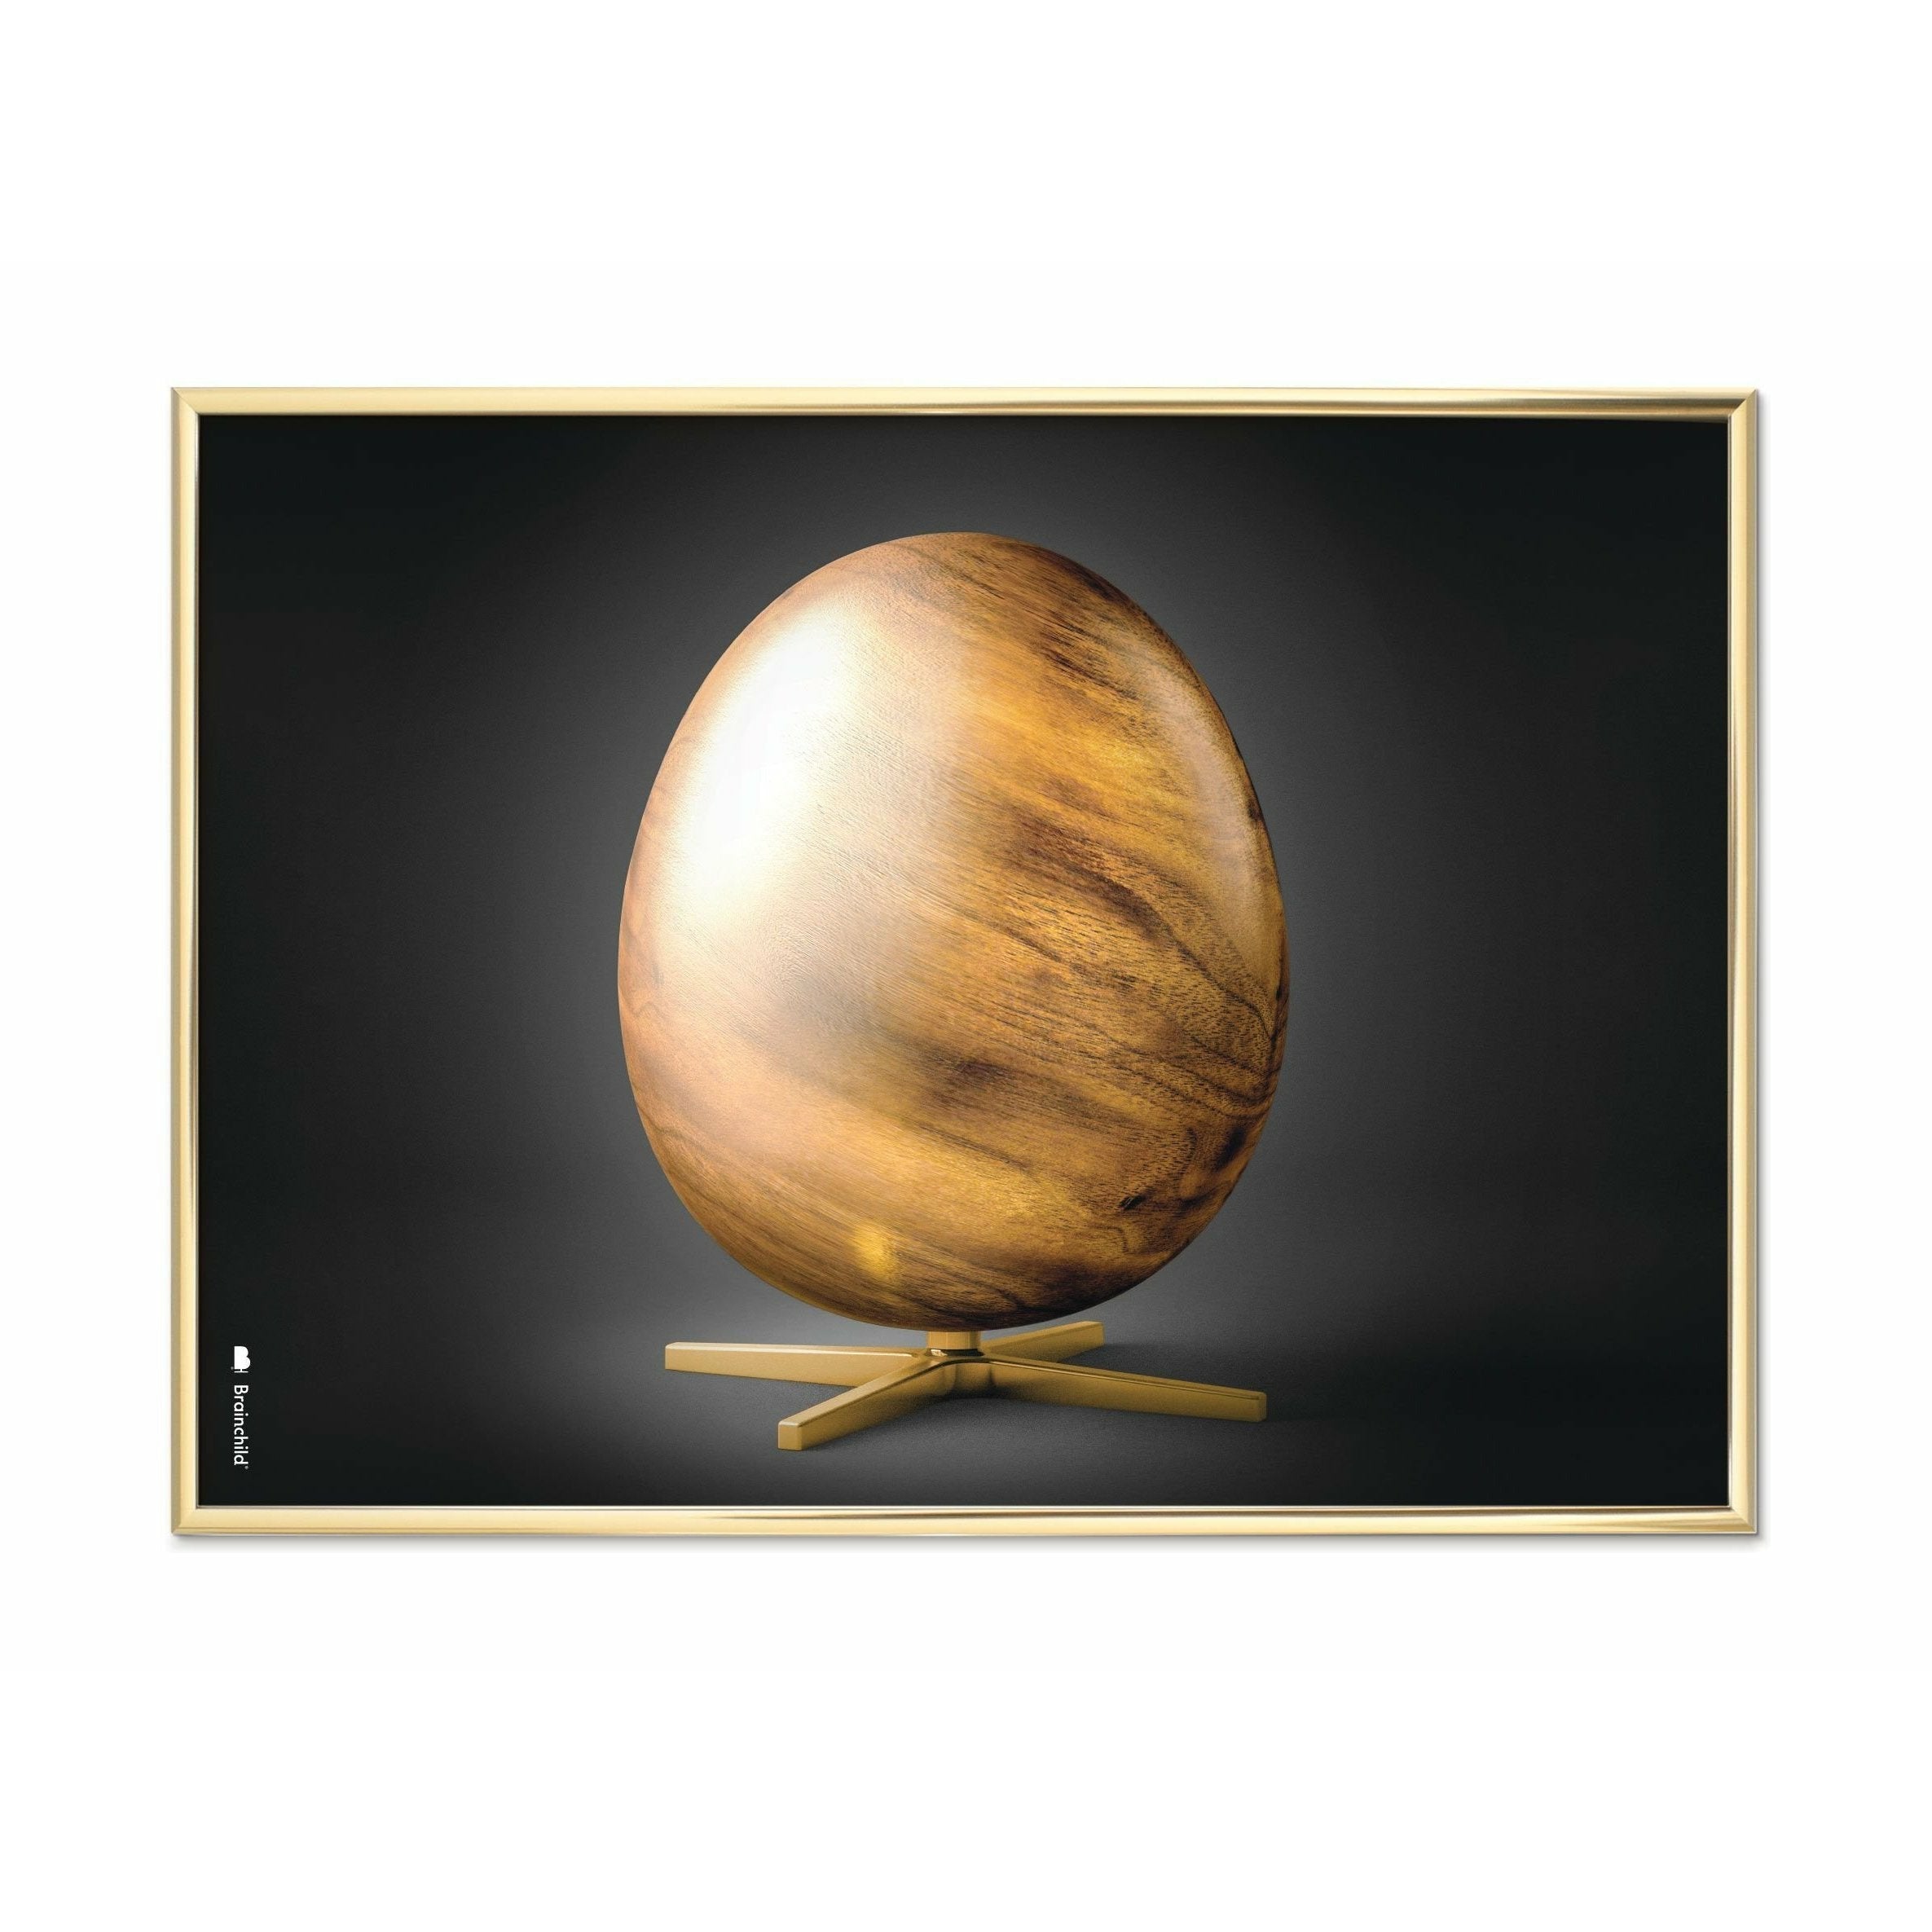 Brainchild Egg Cross Format Poster, Brass Colored Frame A5, Black